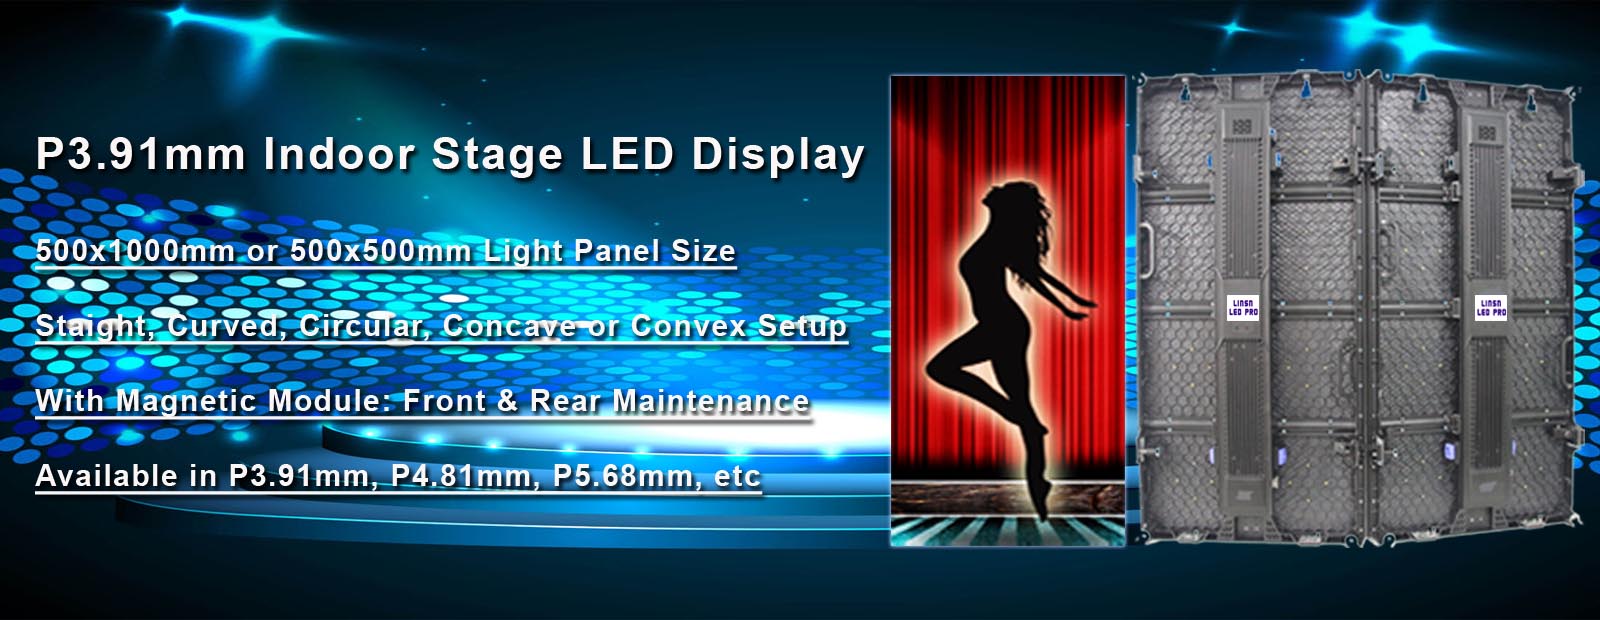 P3.91_Indoor_Stage_LED_Display